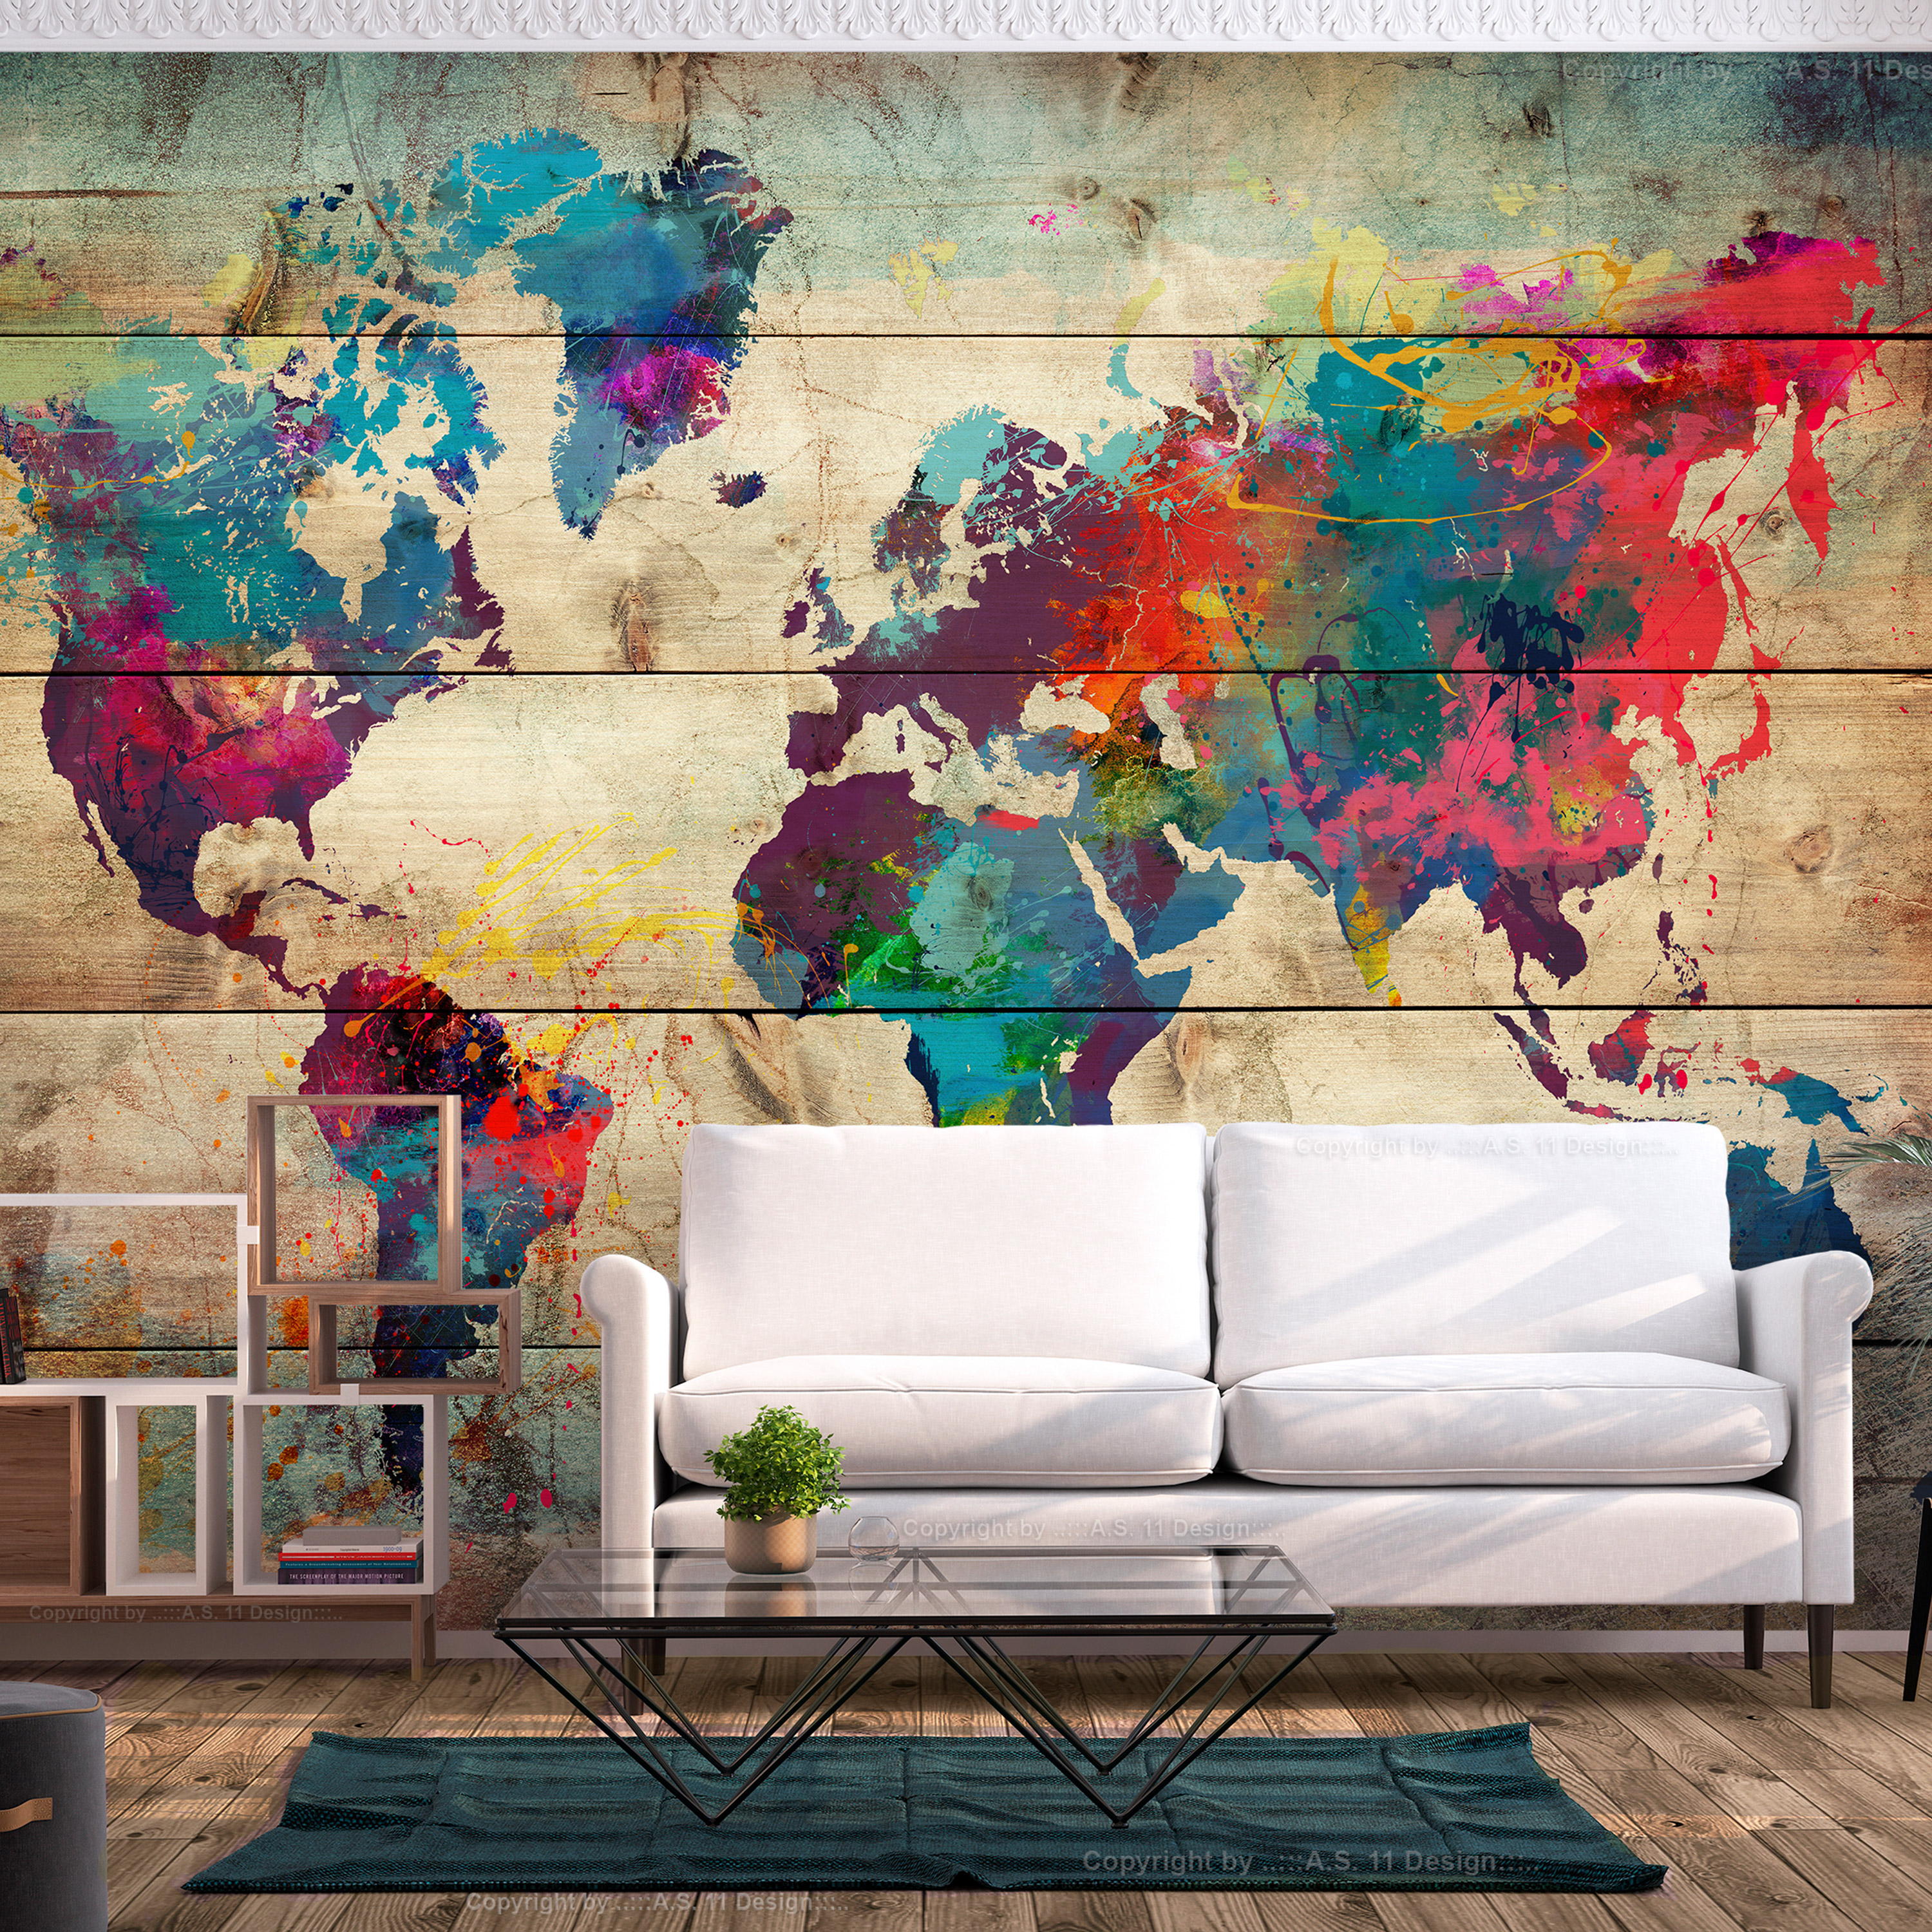 Self-adhesive Wallpaper - Multicolored Nature - 98x70